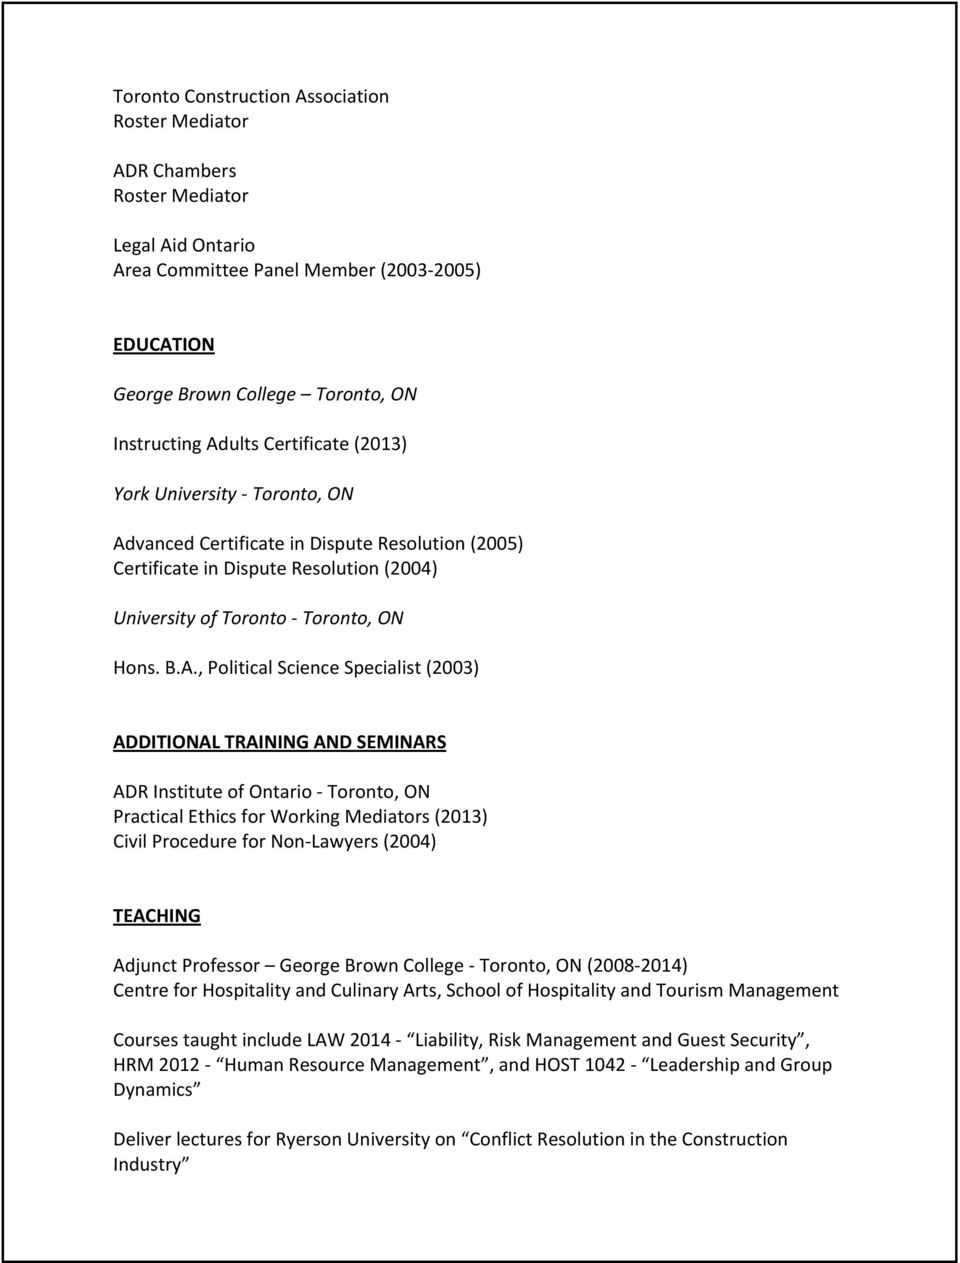 vanced Certificate in Dispute Resolution (2005) Certificate in Dispute Resolution (2004) University of Toronto - Toronto, ON Hons. B.A.